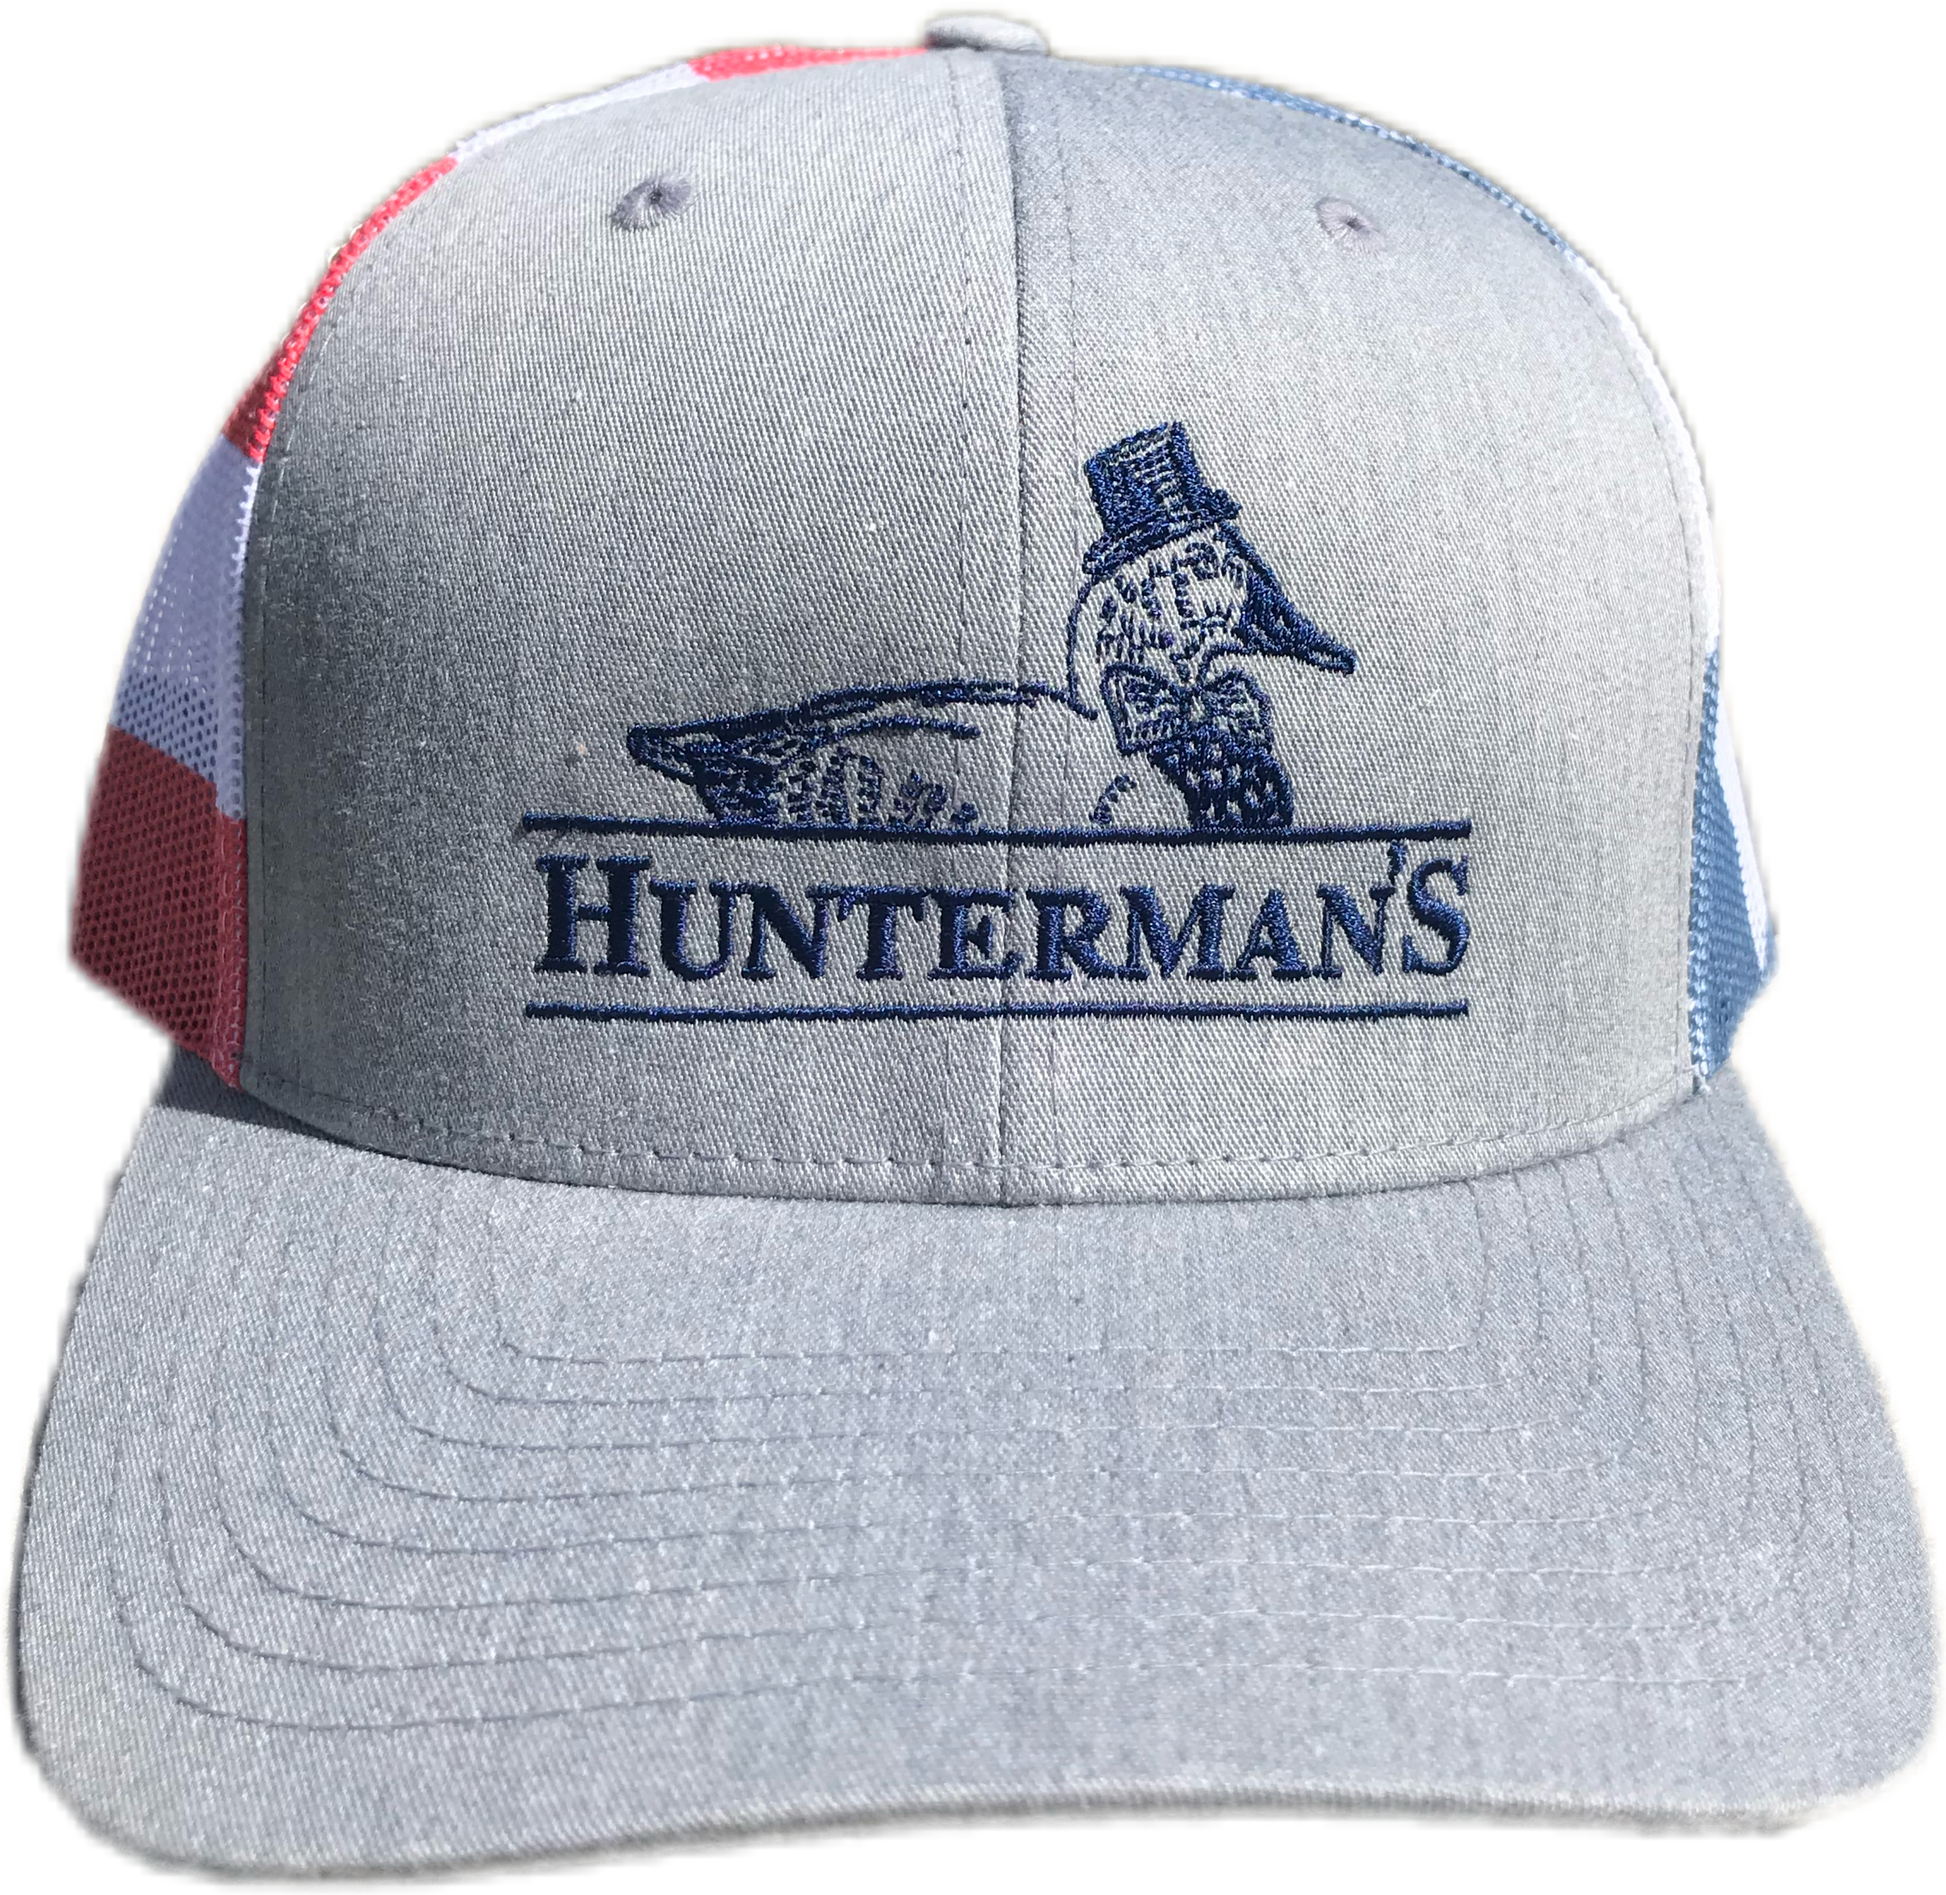 Stars and Stripes/Navy Hat - Hunterman's Apparel